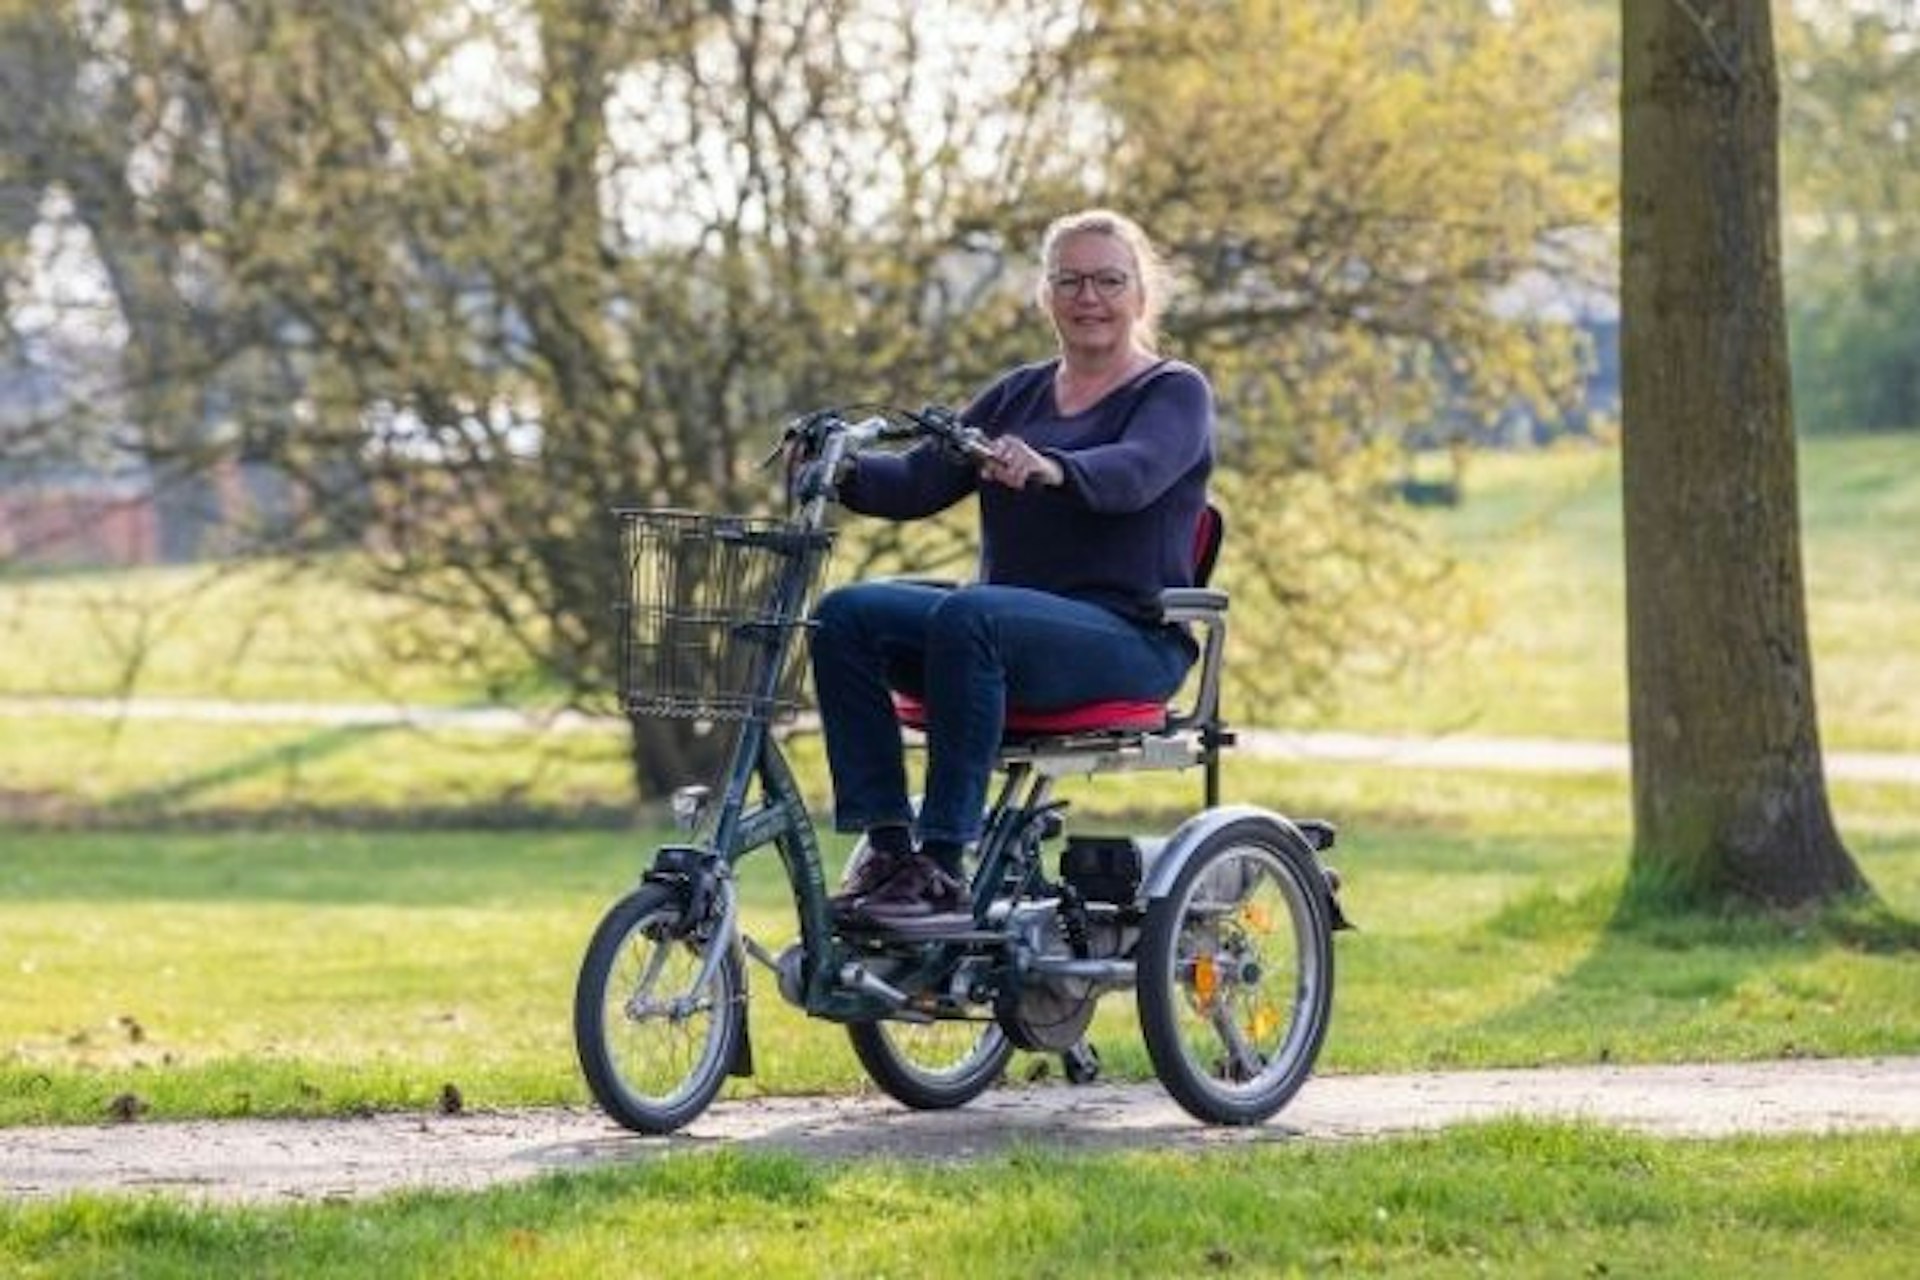 Mobilität für senioren van raam easy go Elektromobil-Dreirad